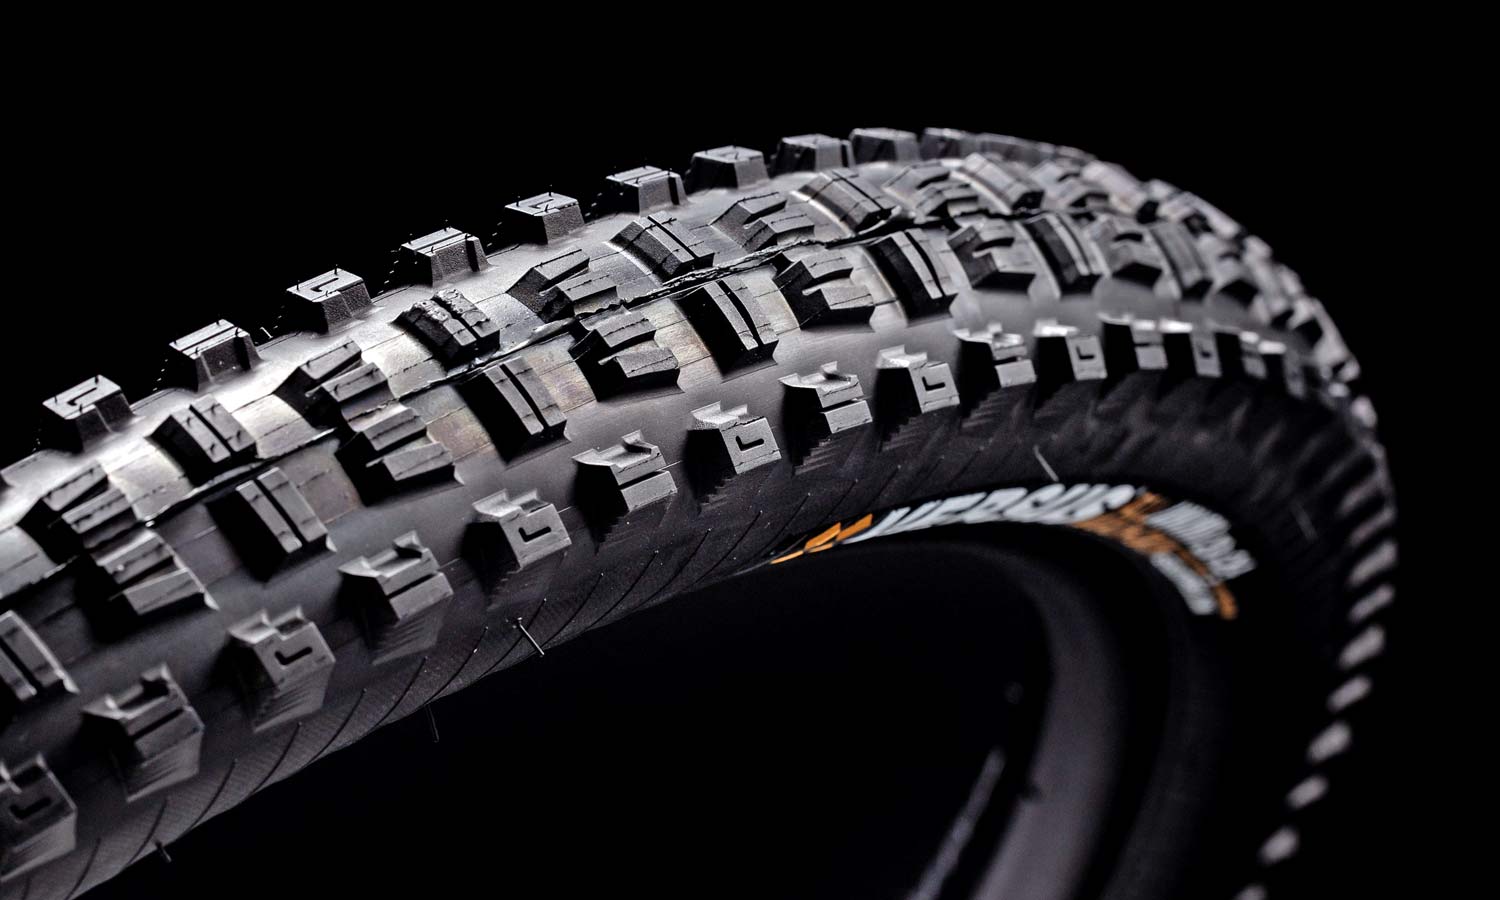 Versus All Mountain MTB tire, affordable premium Trail & Gravity mountain bike tires consumer direct